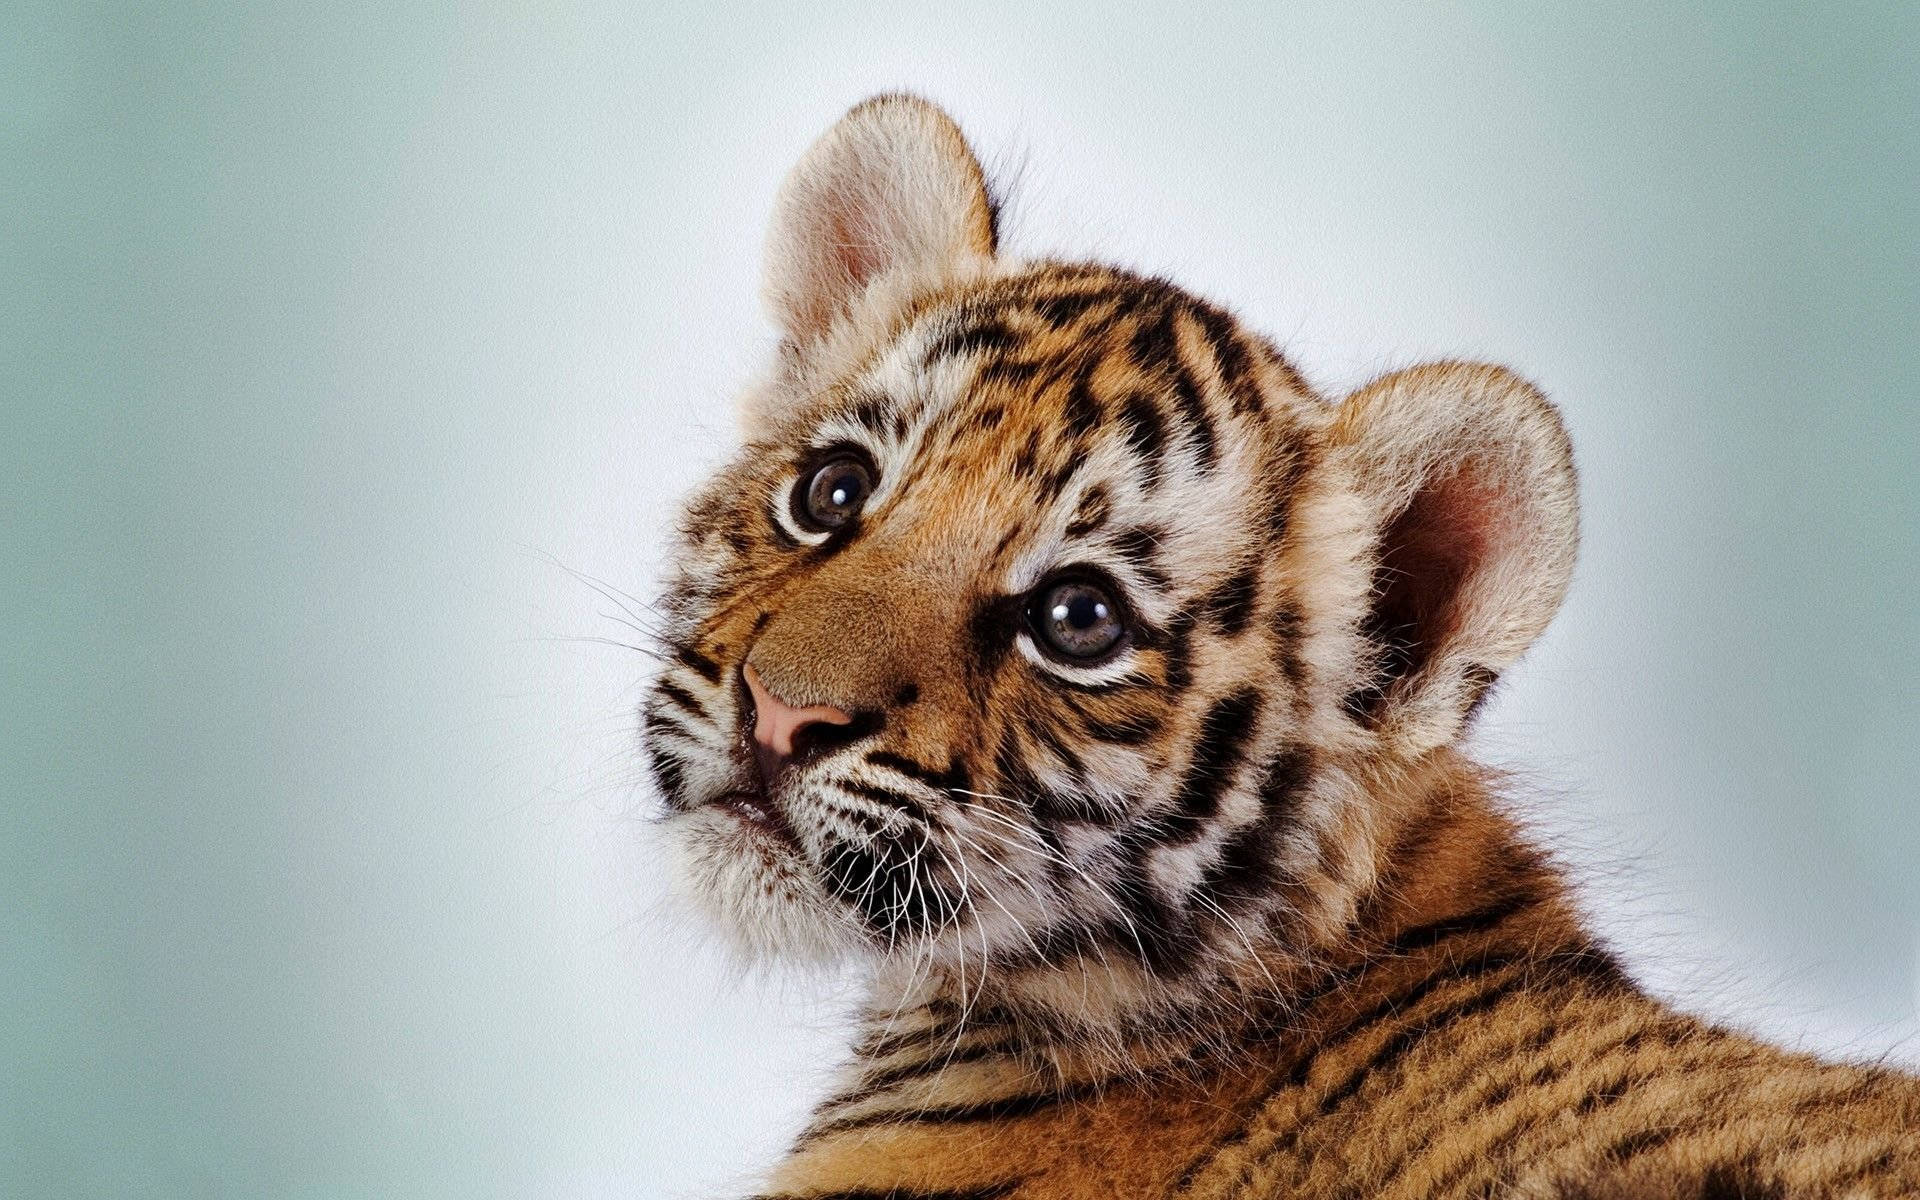 Baby Tiger Adorable Portrait Wallpaper